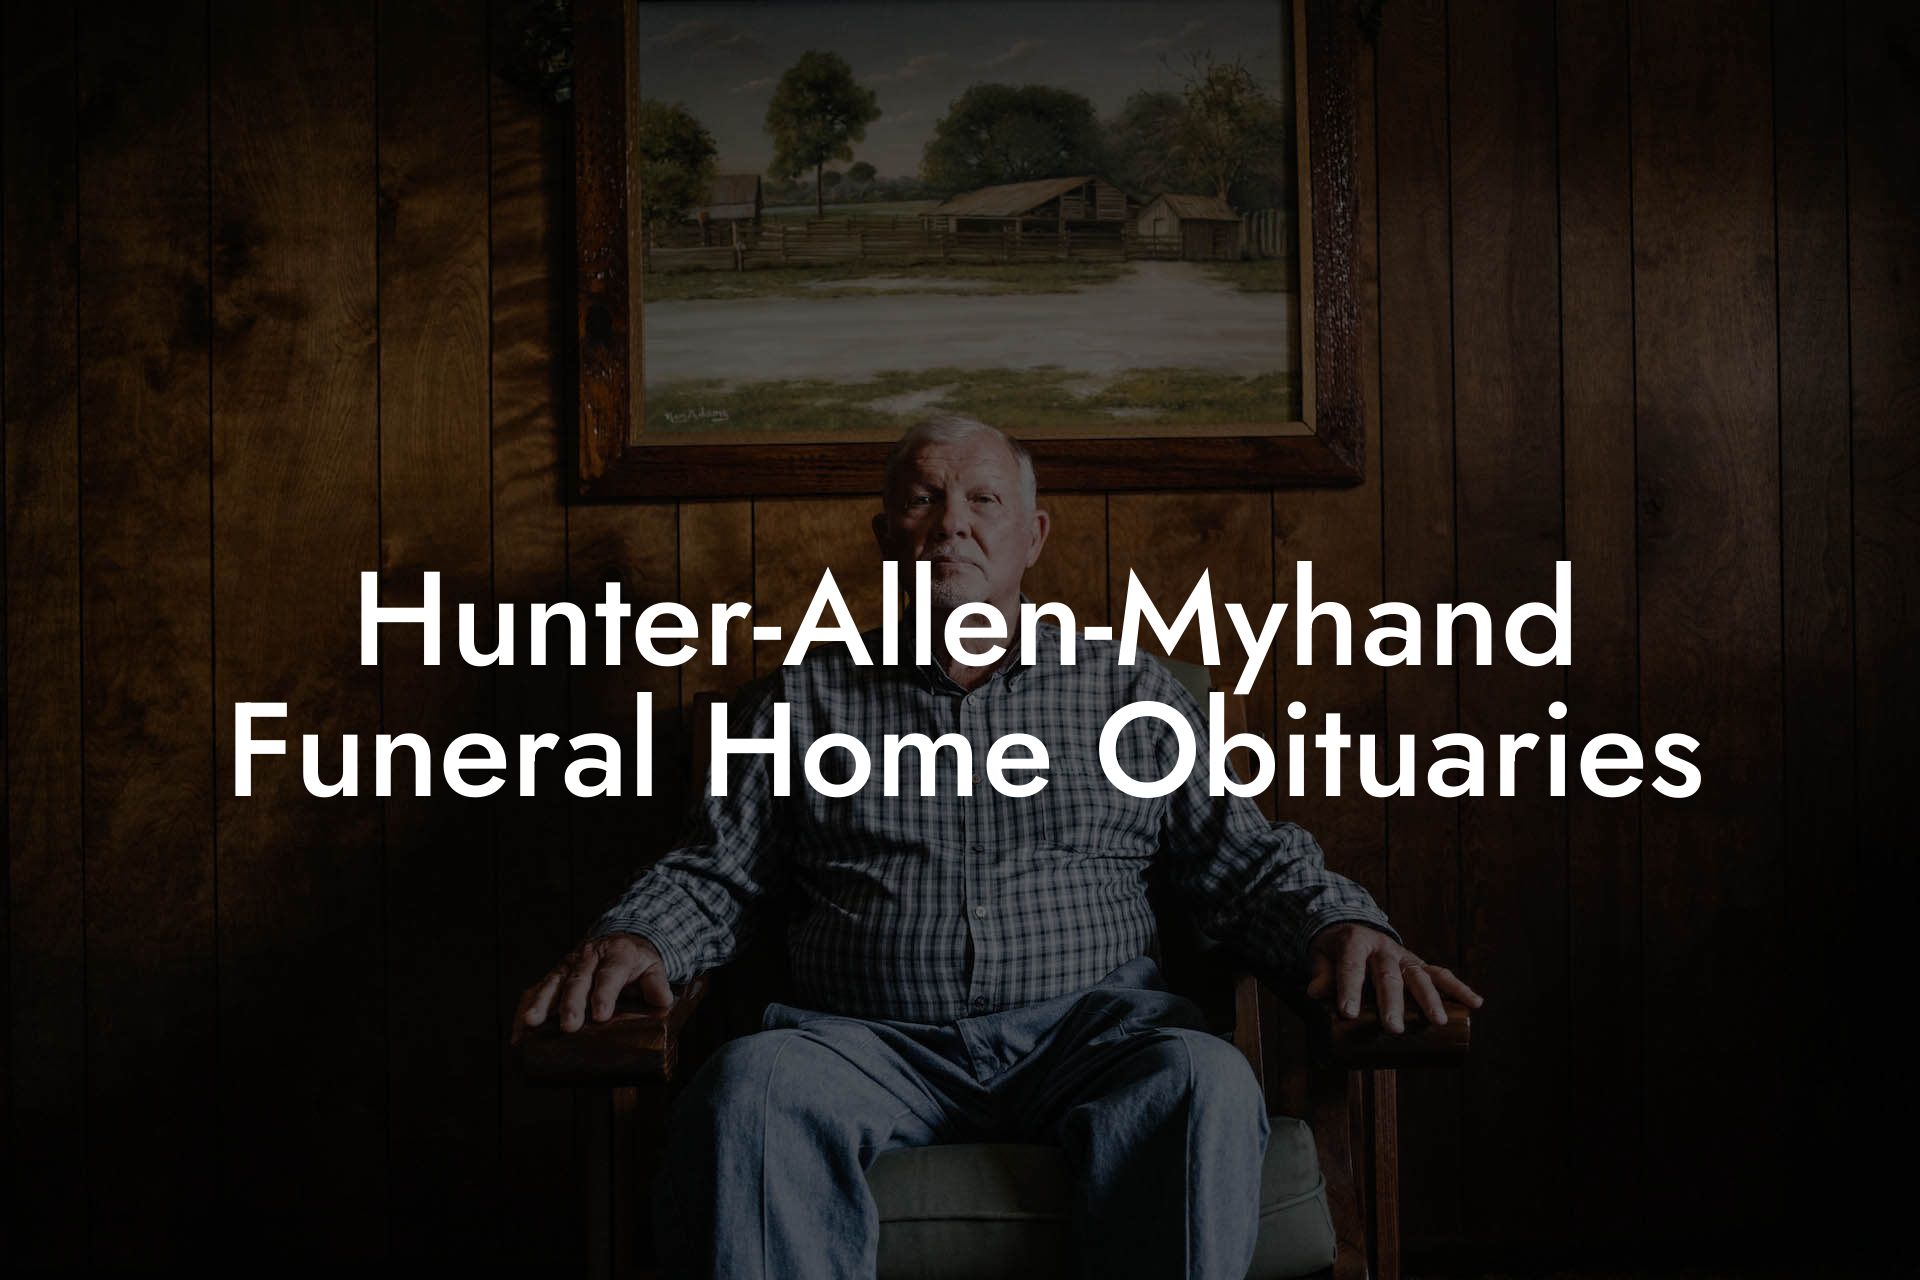 Hunter-Allen-Myhand Funeral Home Obituaries